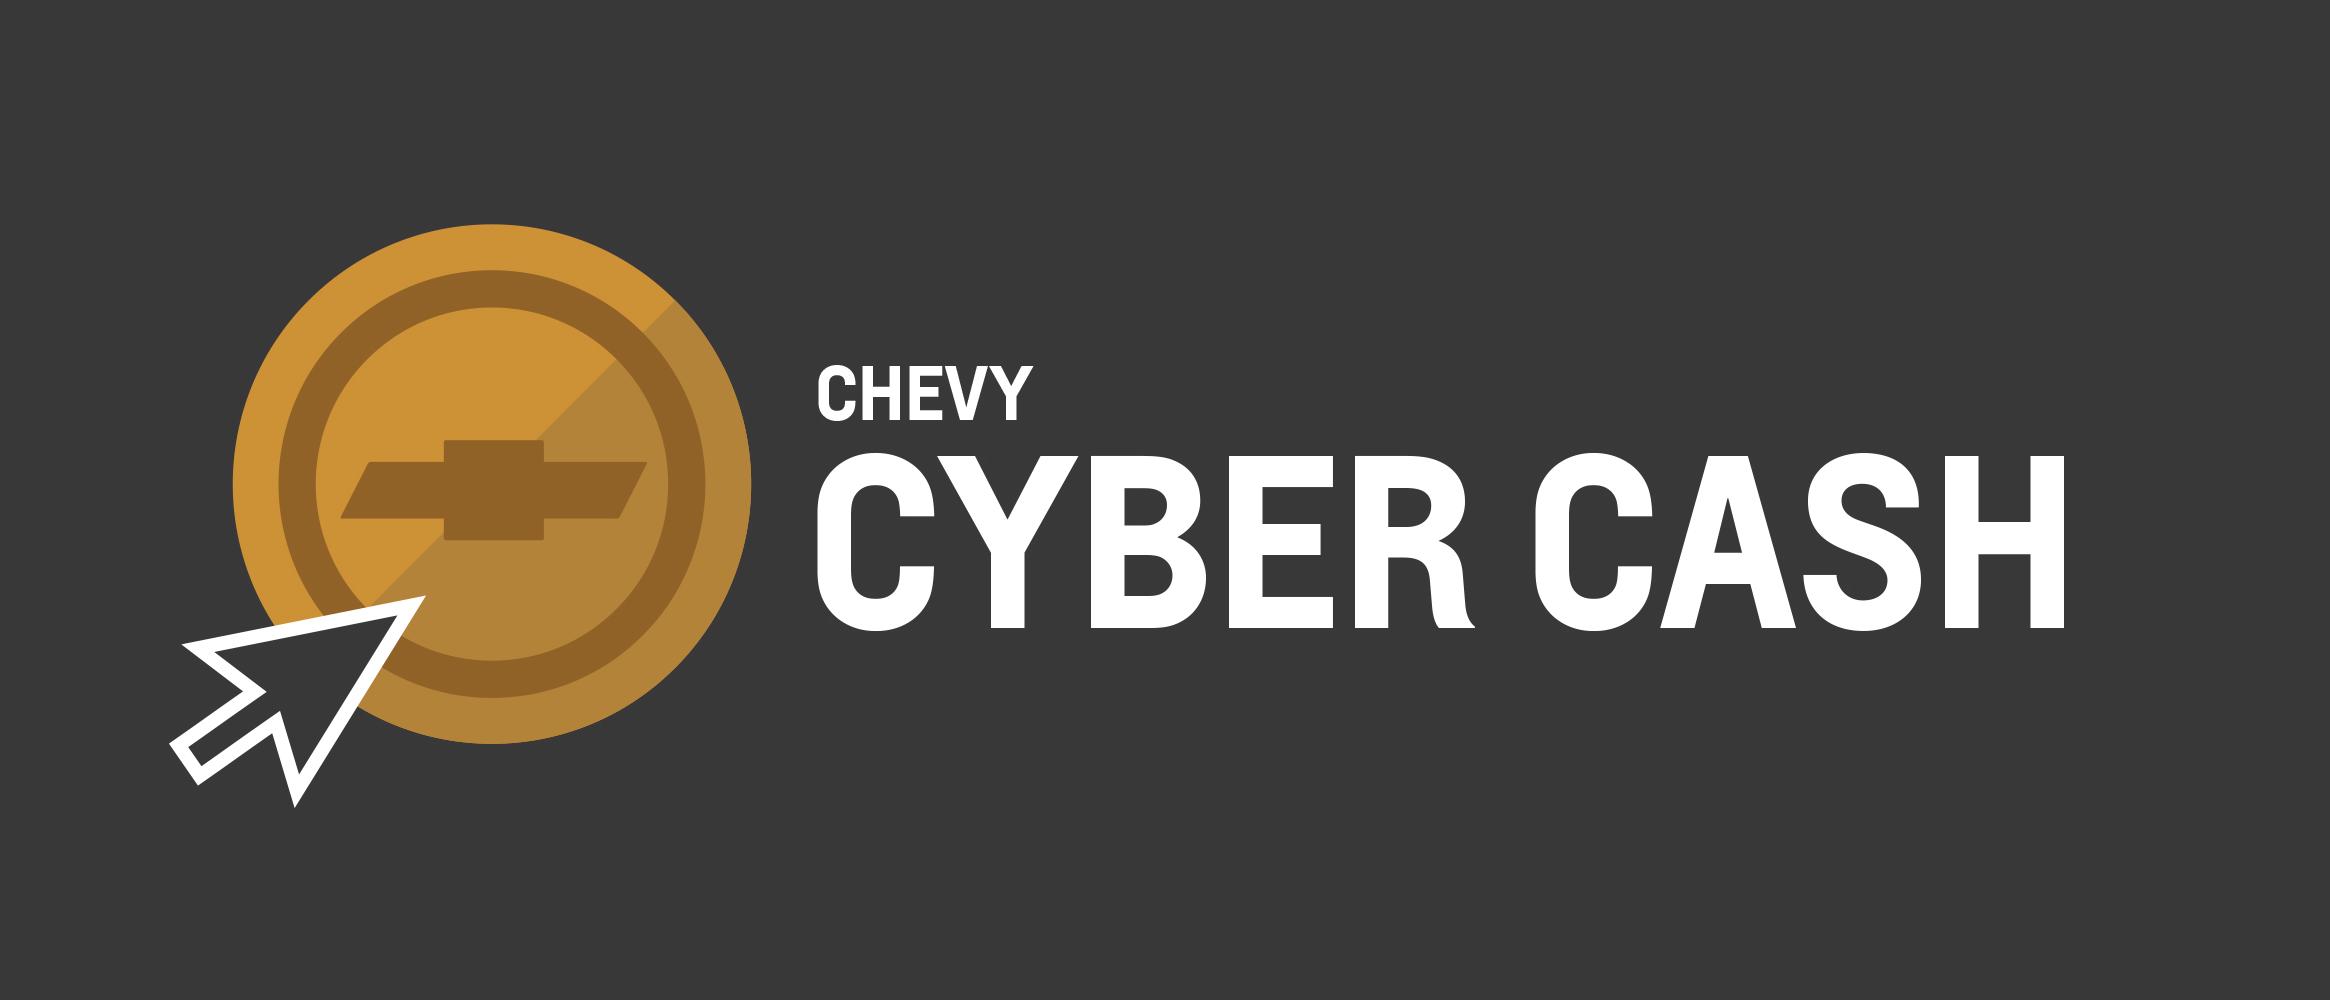 Chevy Cyber Cash